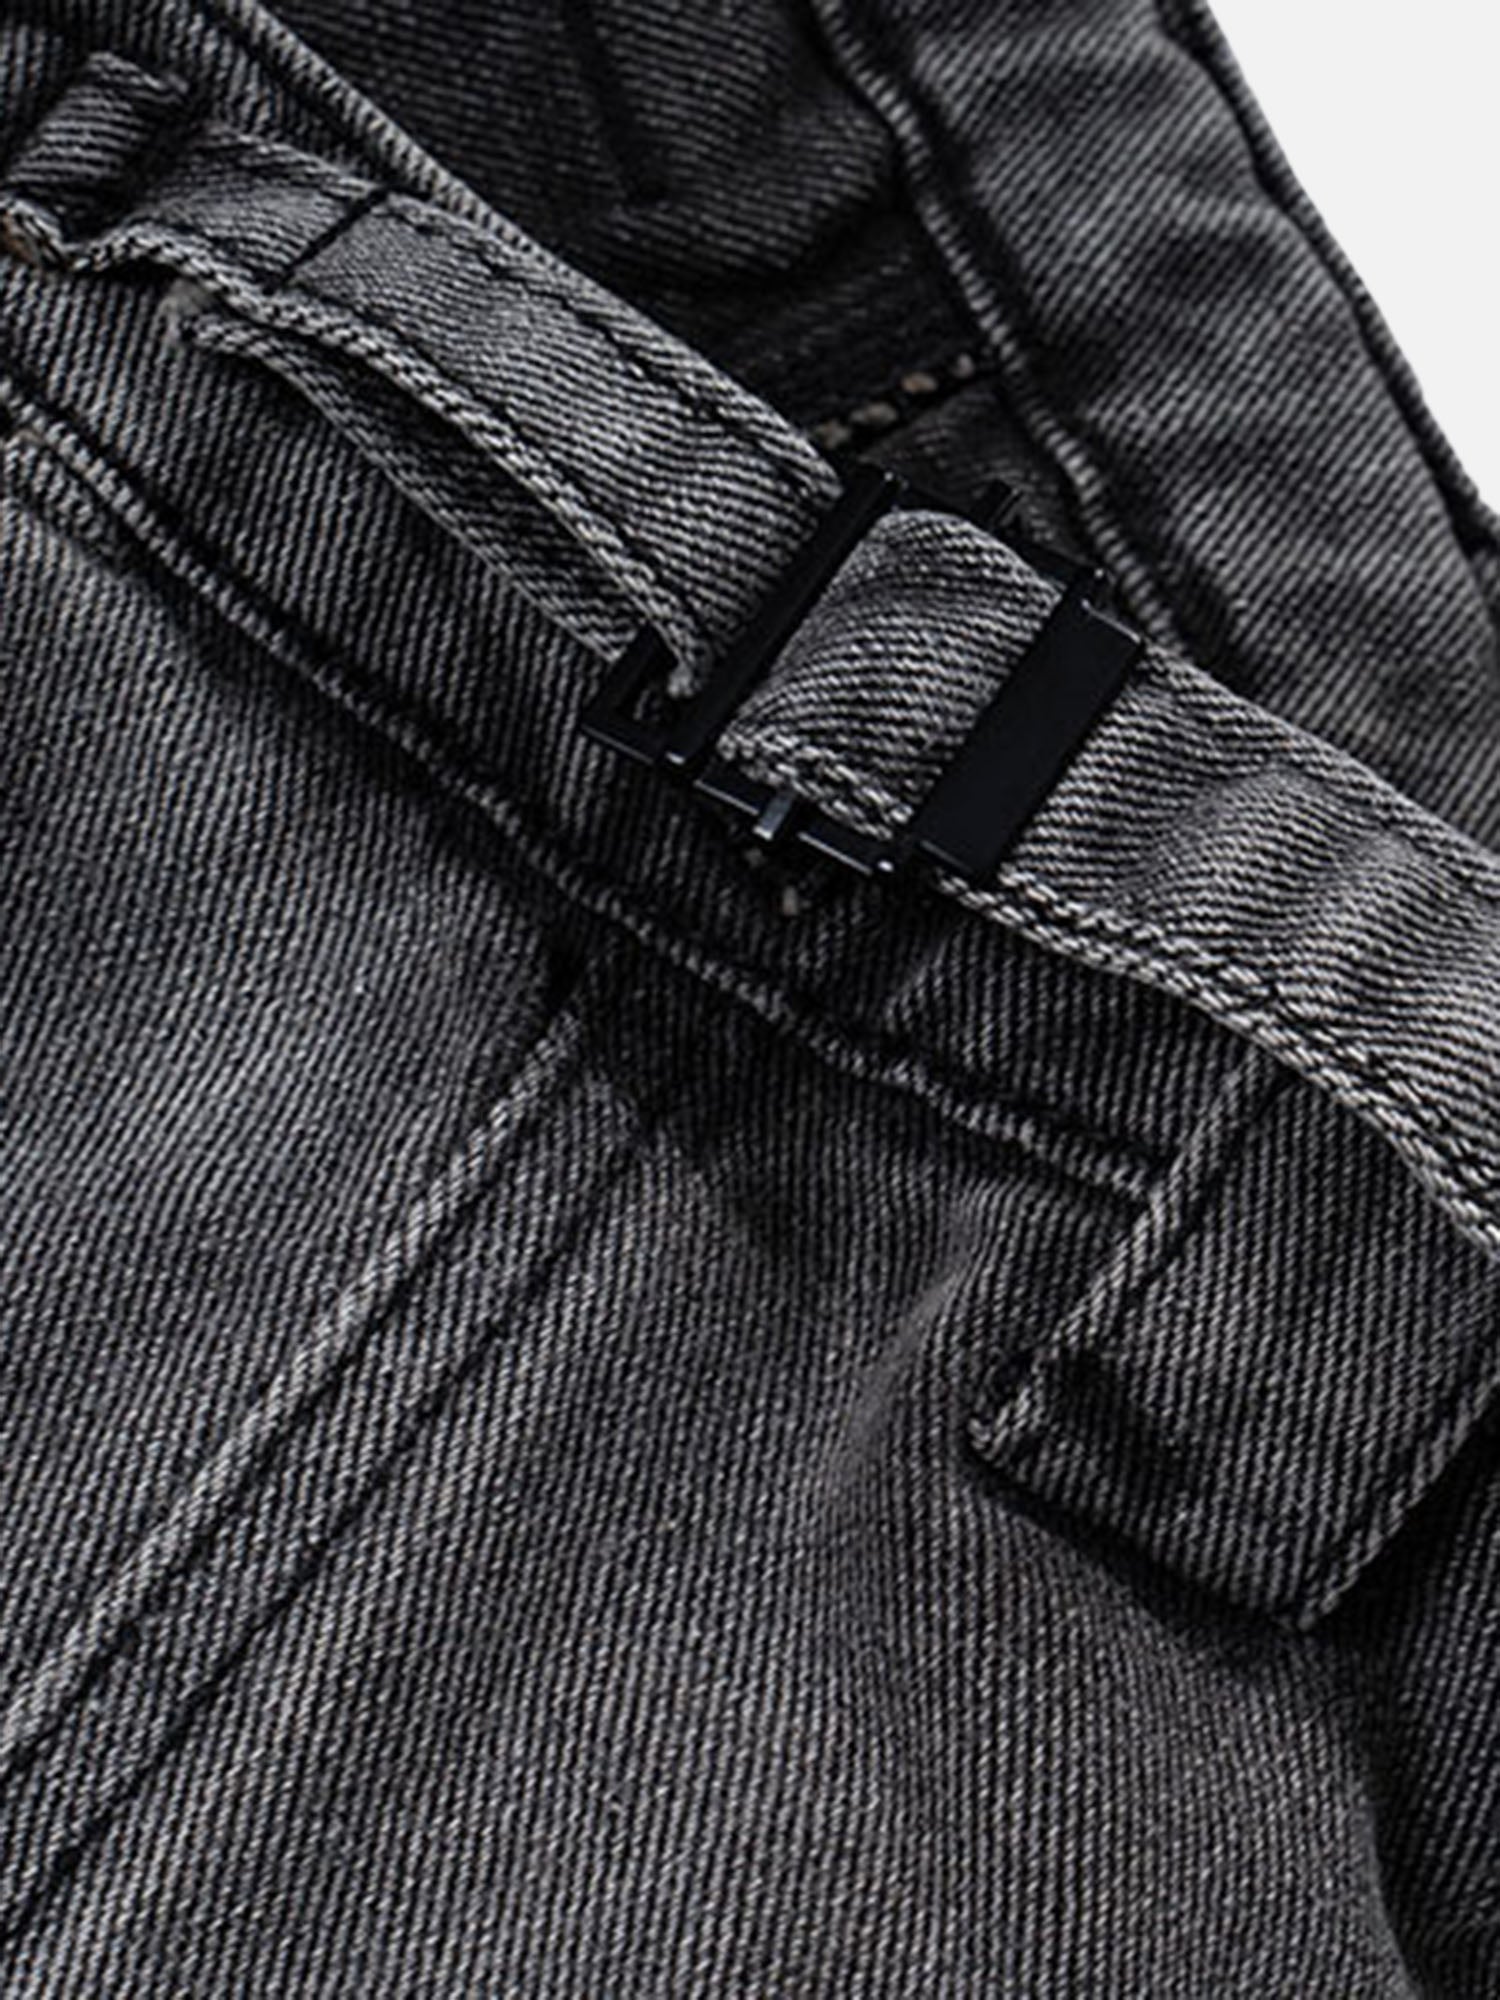 American High Street Irregular Niche Design Work Jeans